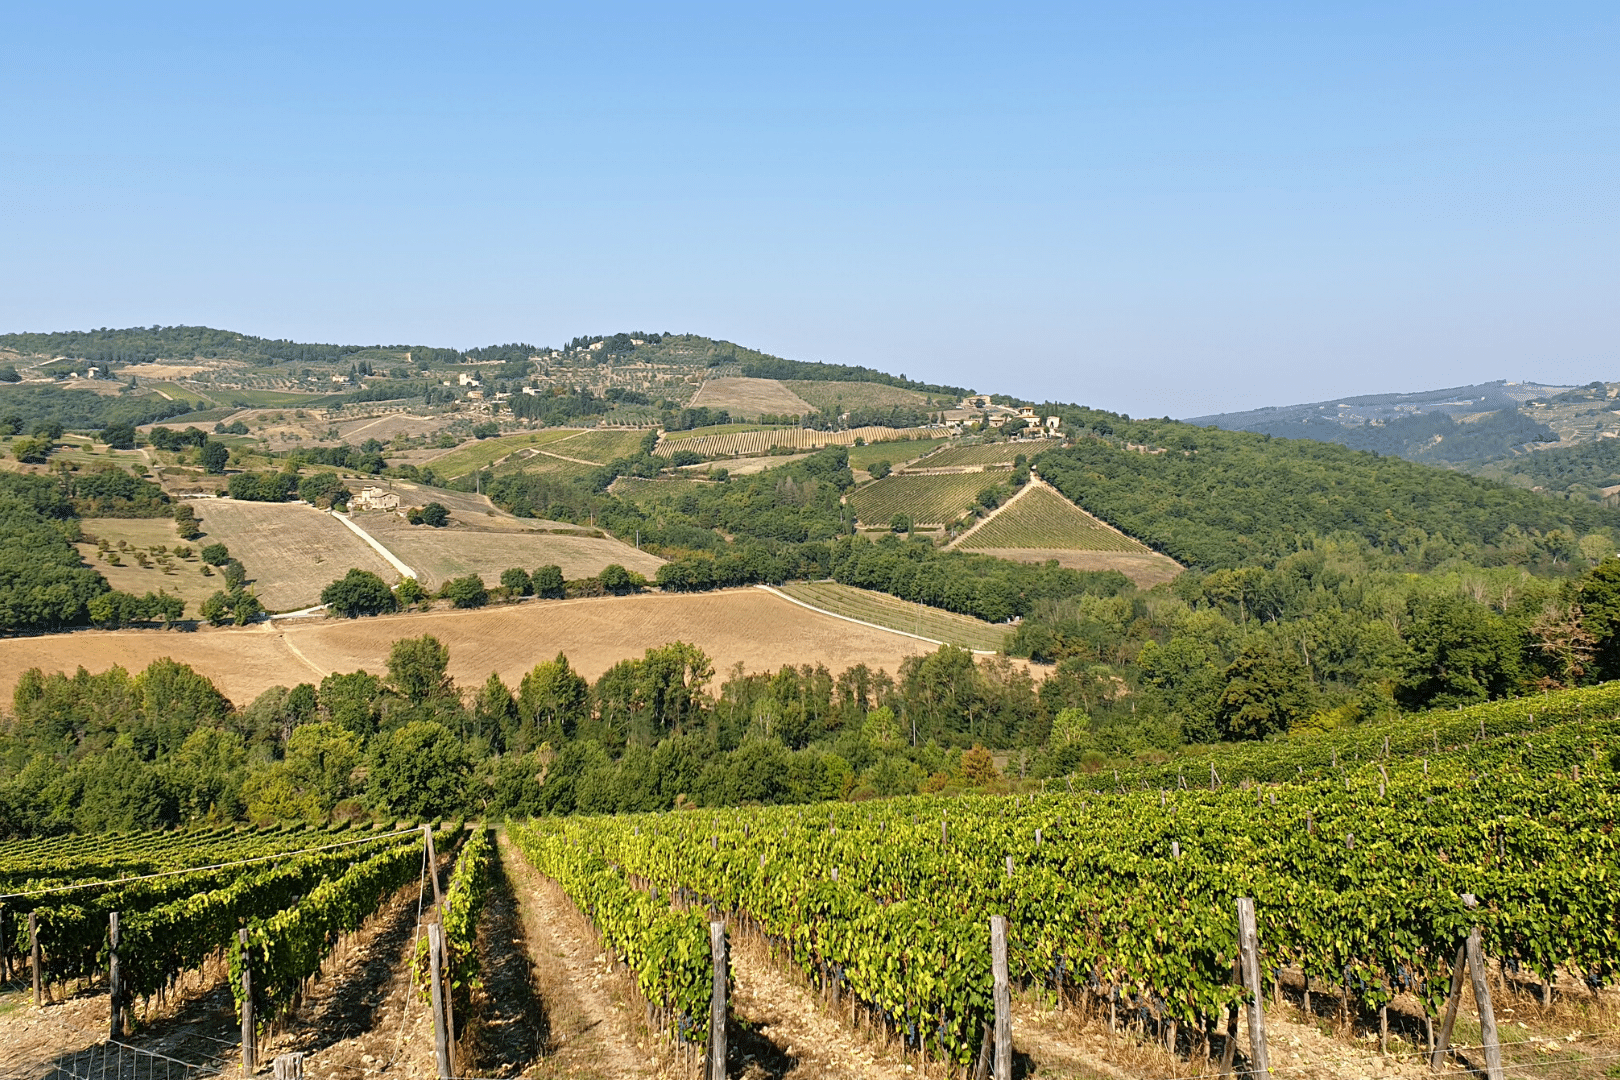 2Italia Chianti and Food & Wine. Chianti rolling hills and vineyards